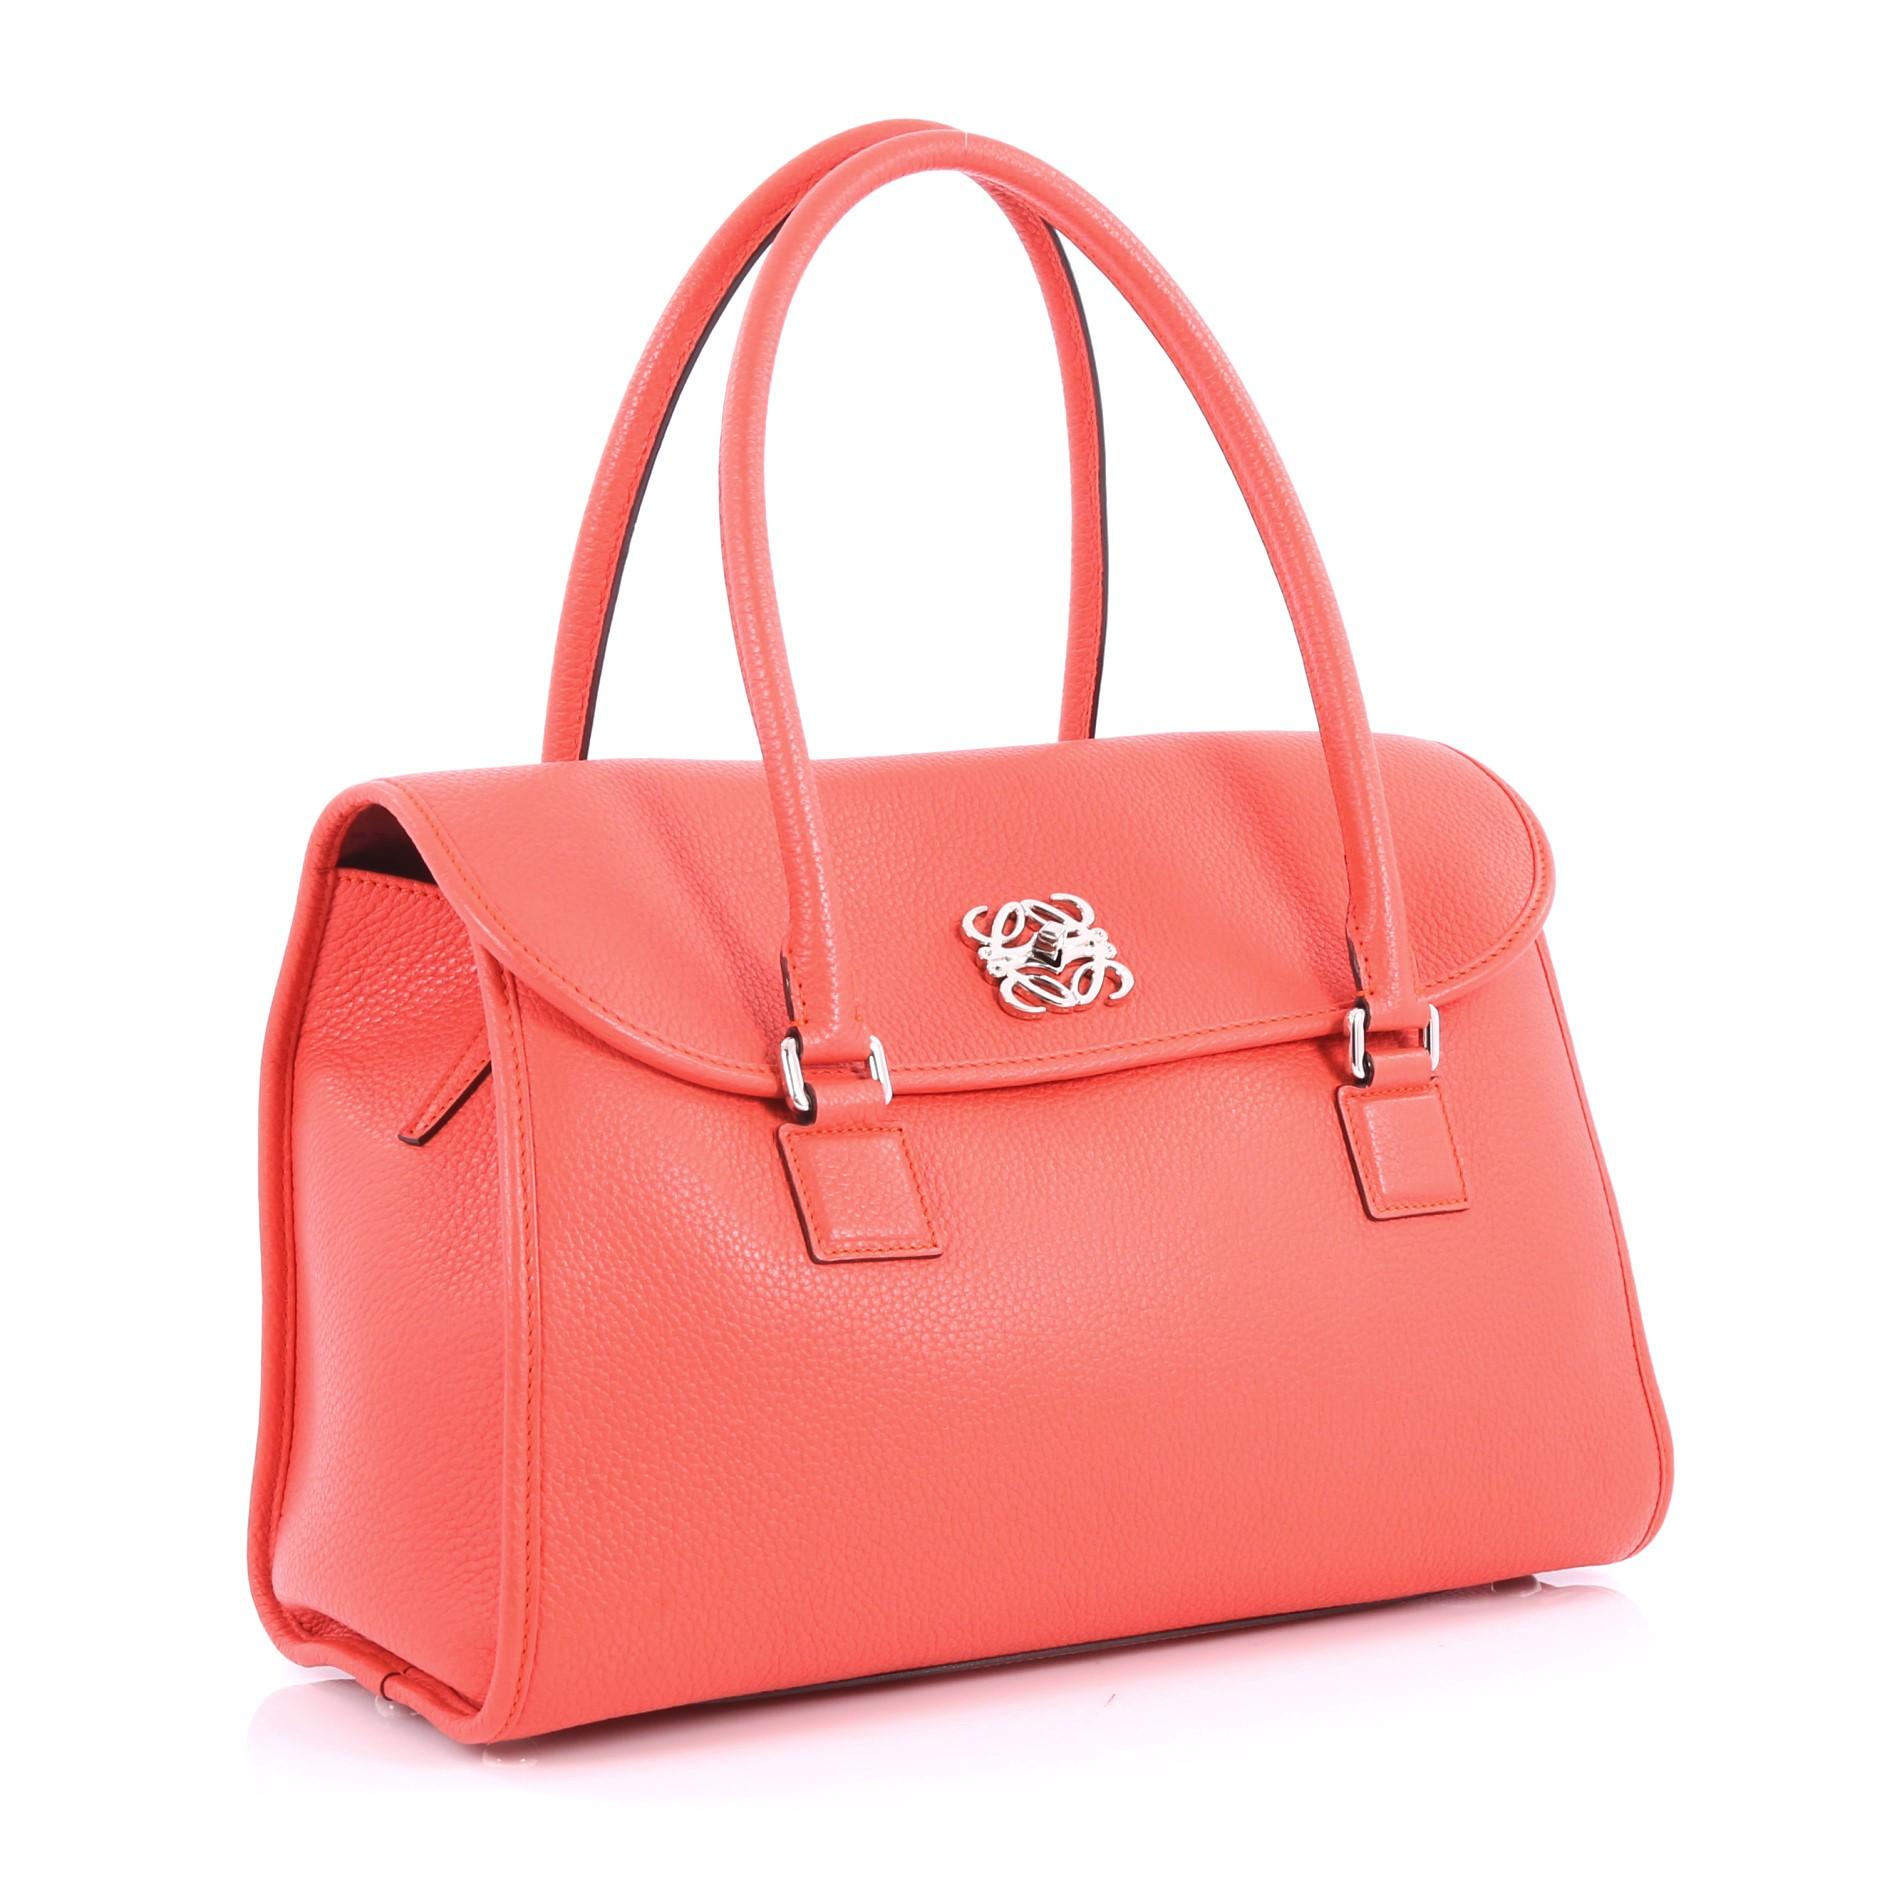 Pink Loewe Alamo Handbag Leather 36 Alamo Handbag Leather 36